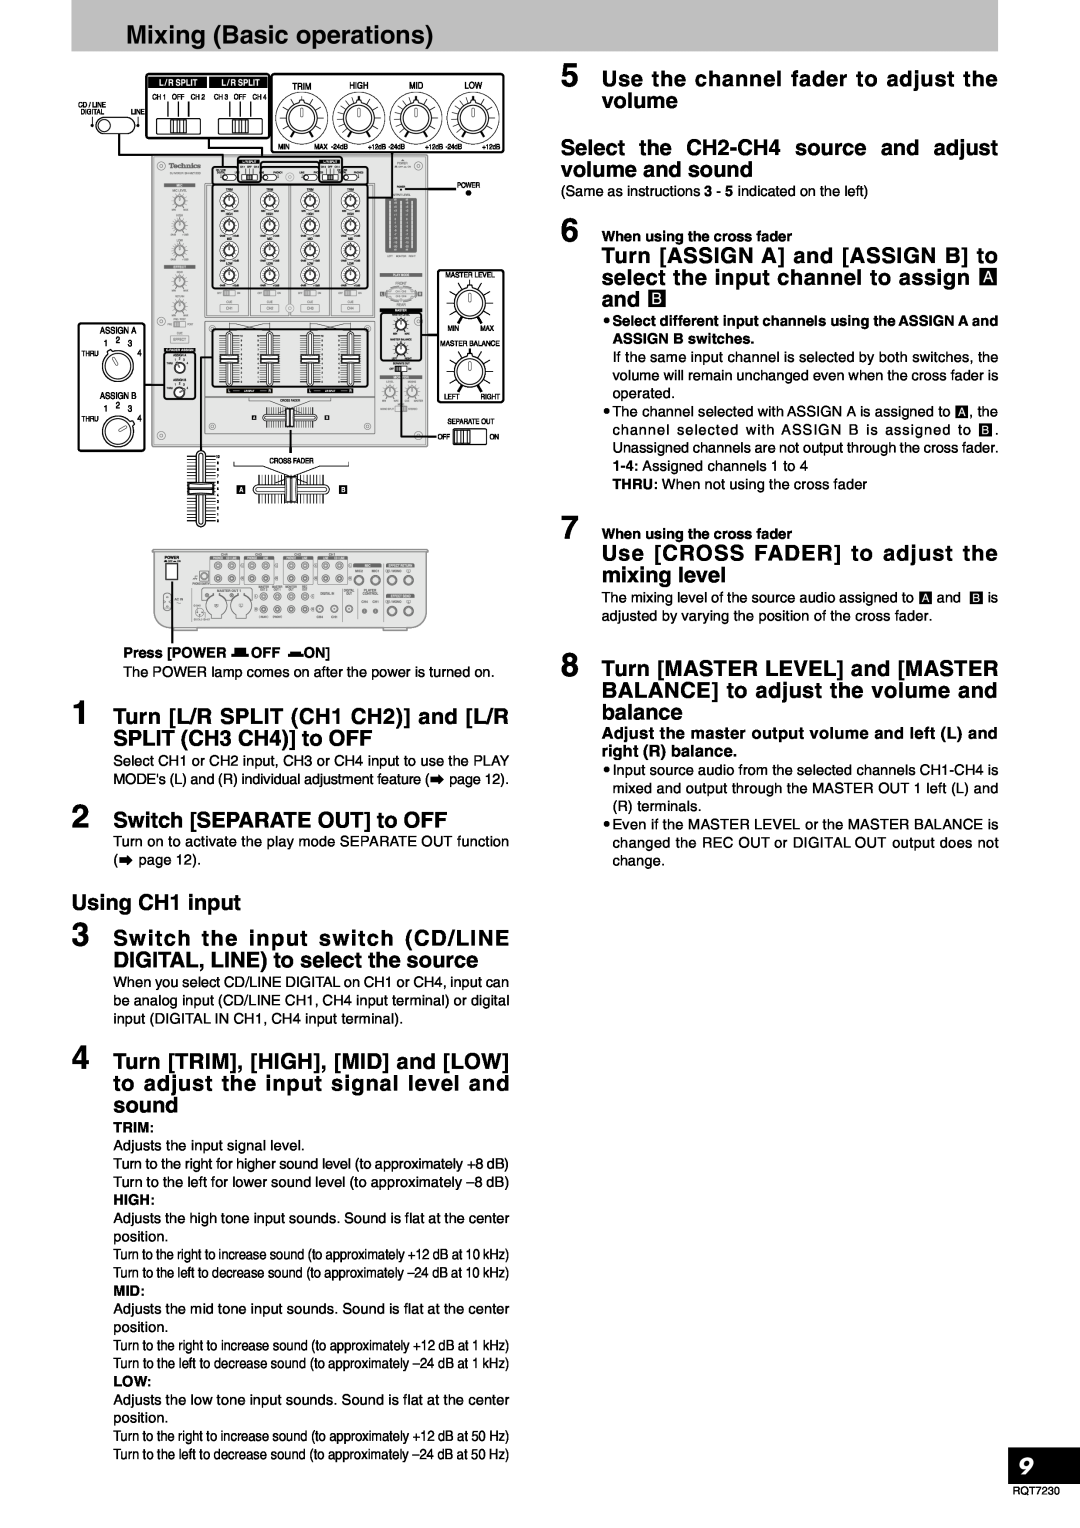 Panasonic SH-MZ1200, RQT7230-3Y operating instructions Mixing Basic operations 